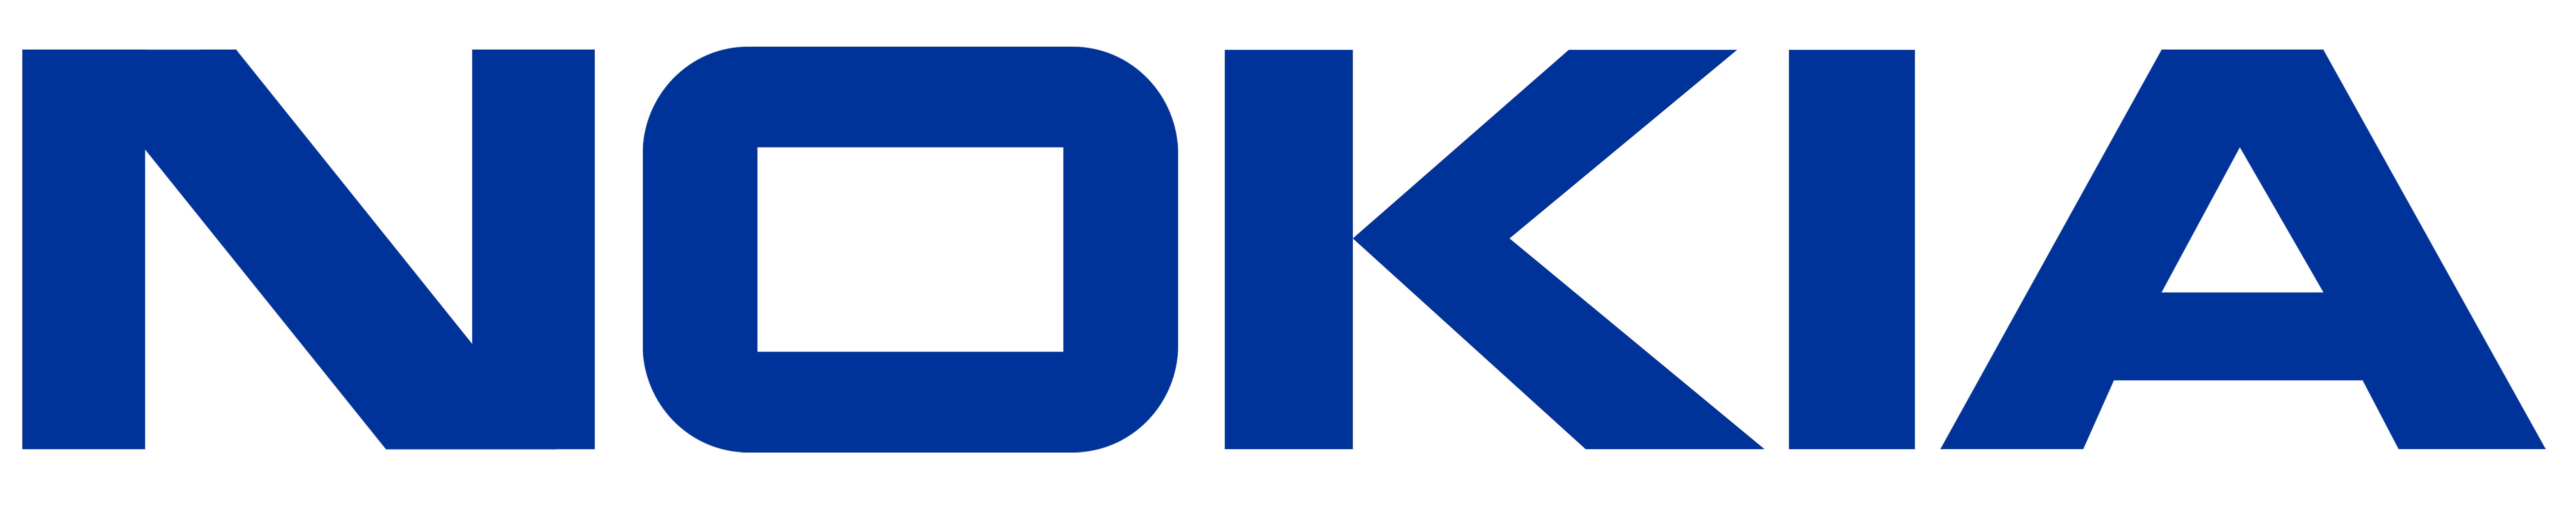 Nokia Logo Picture #1486